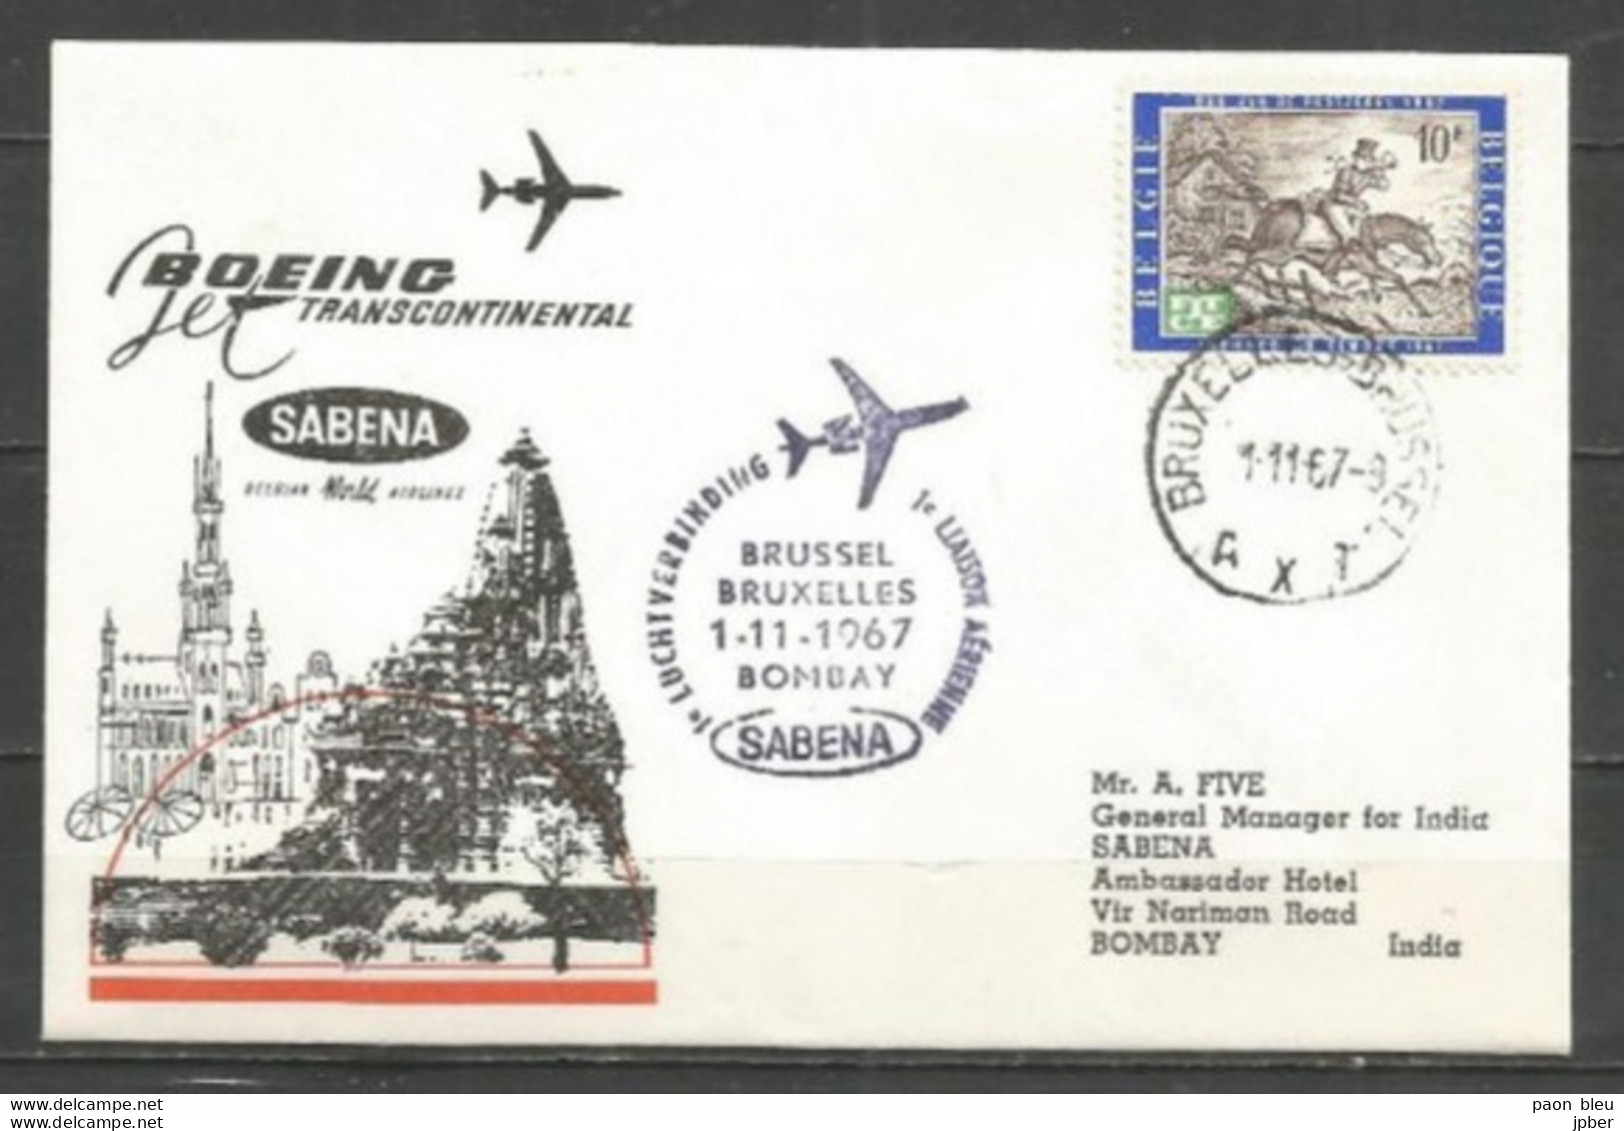 BRUXELLES-BOMBAY 1-11-1967 - Sabena Boeing - Timbres Belgique Postillon - Flugzeuge